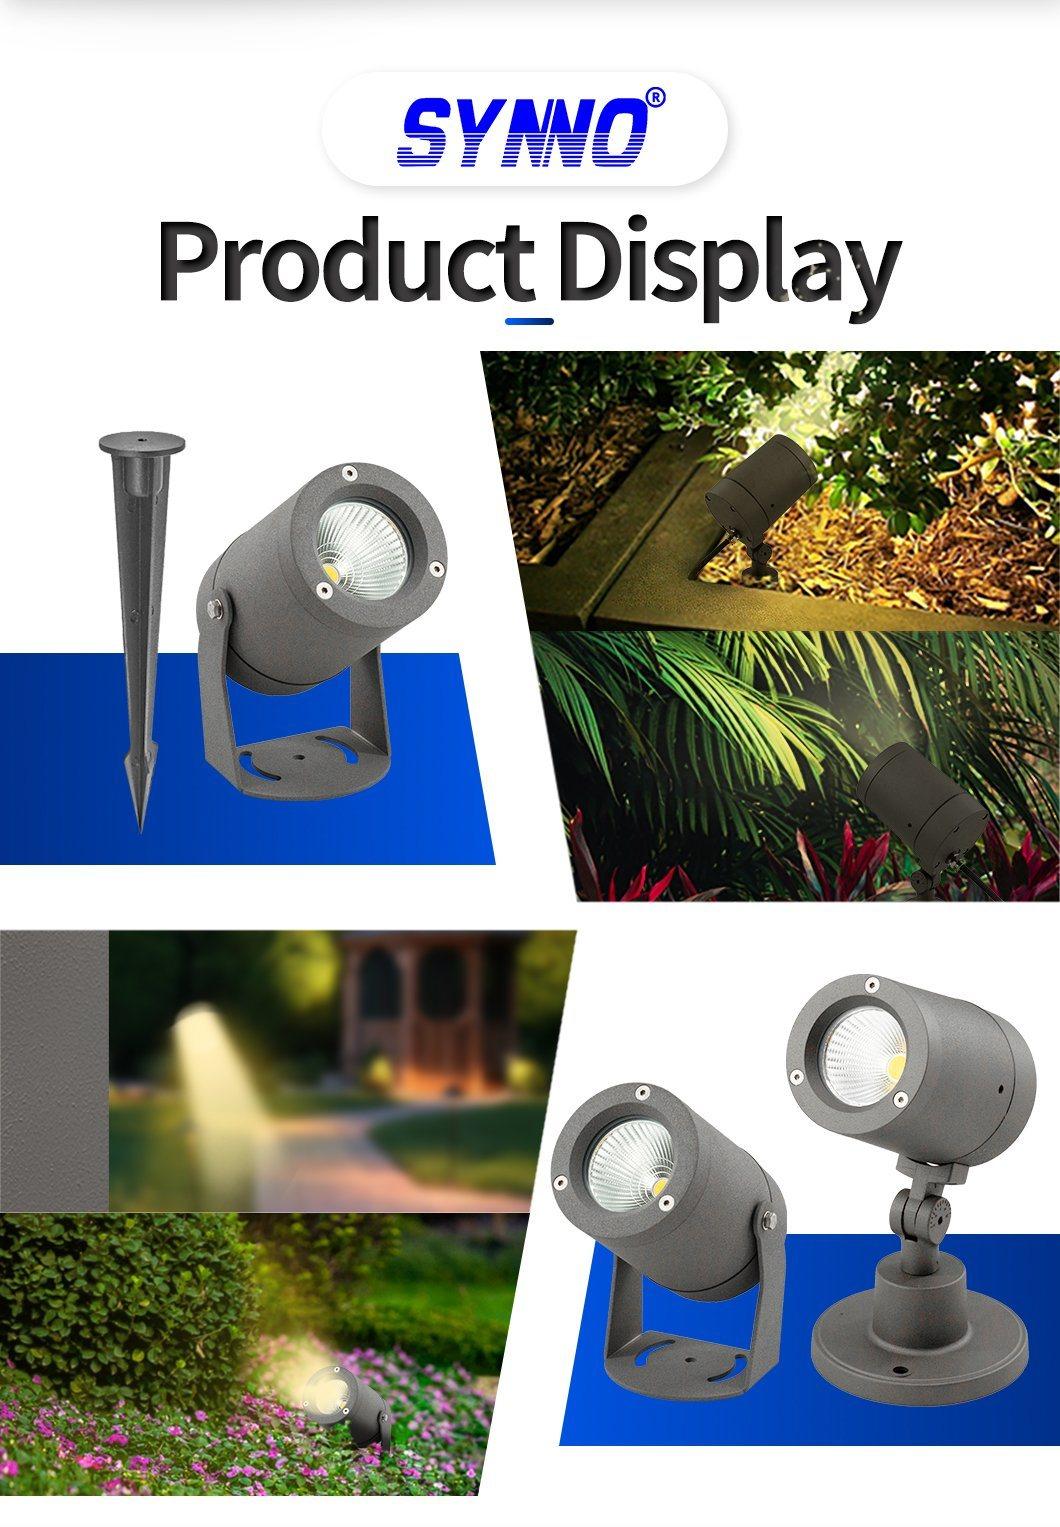 LED Outdoor High Quality Aluminum Spot Light with Spike Pathway Landscape Spitlight Garden Lighting